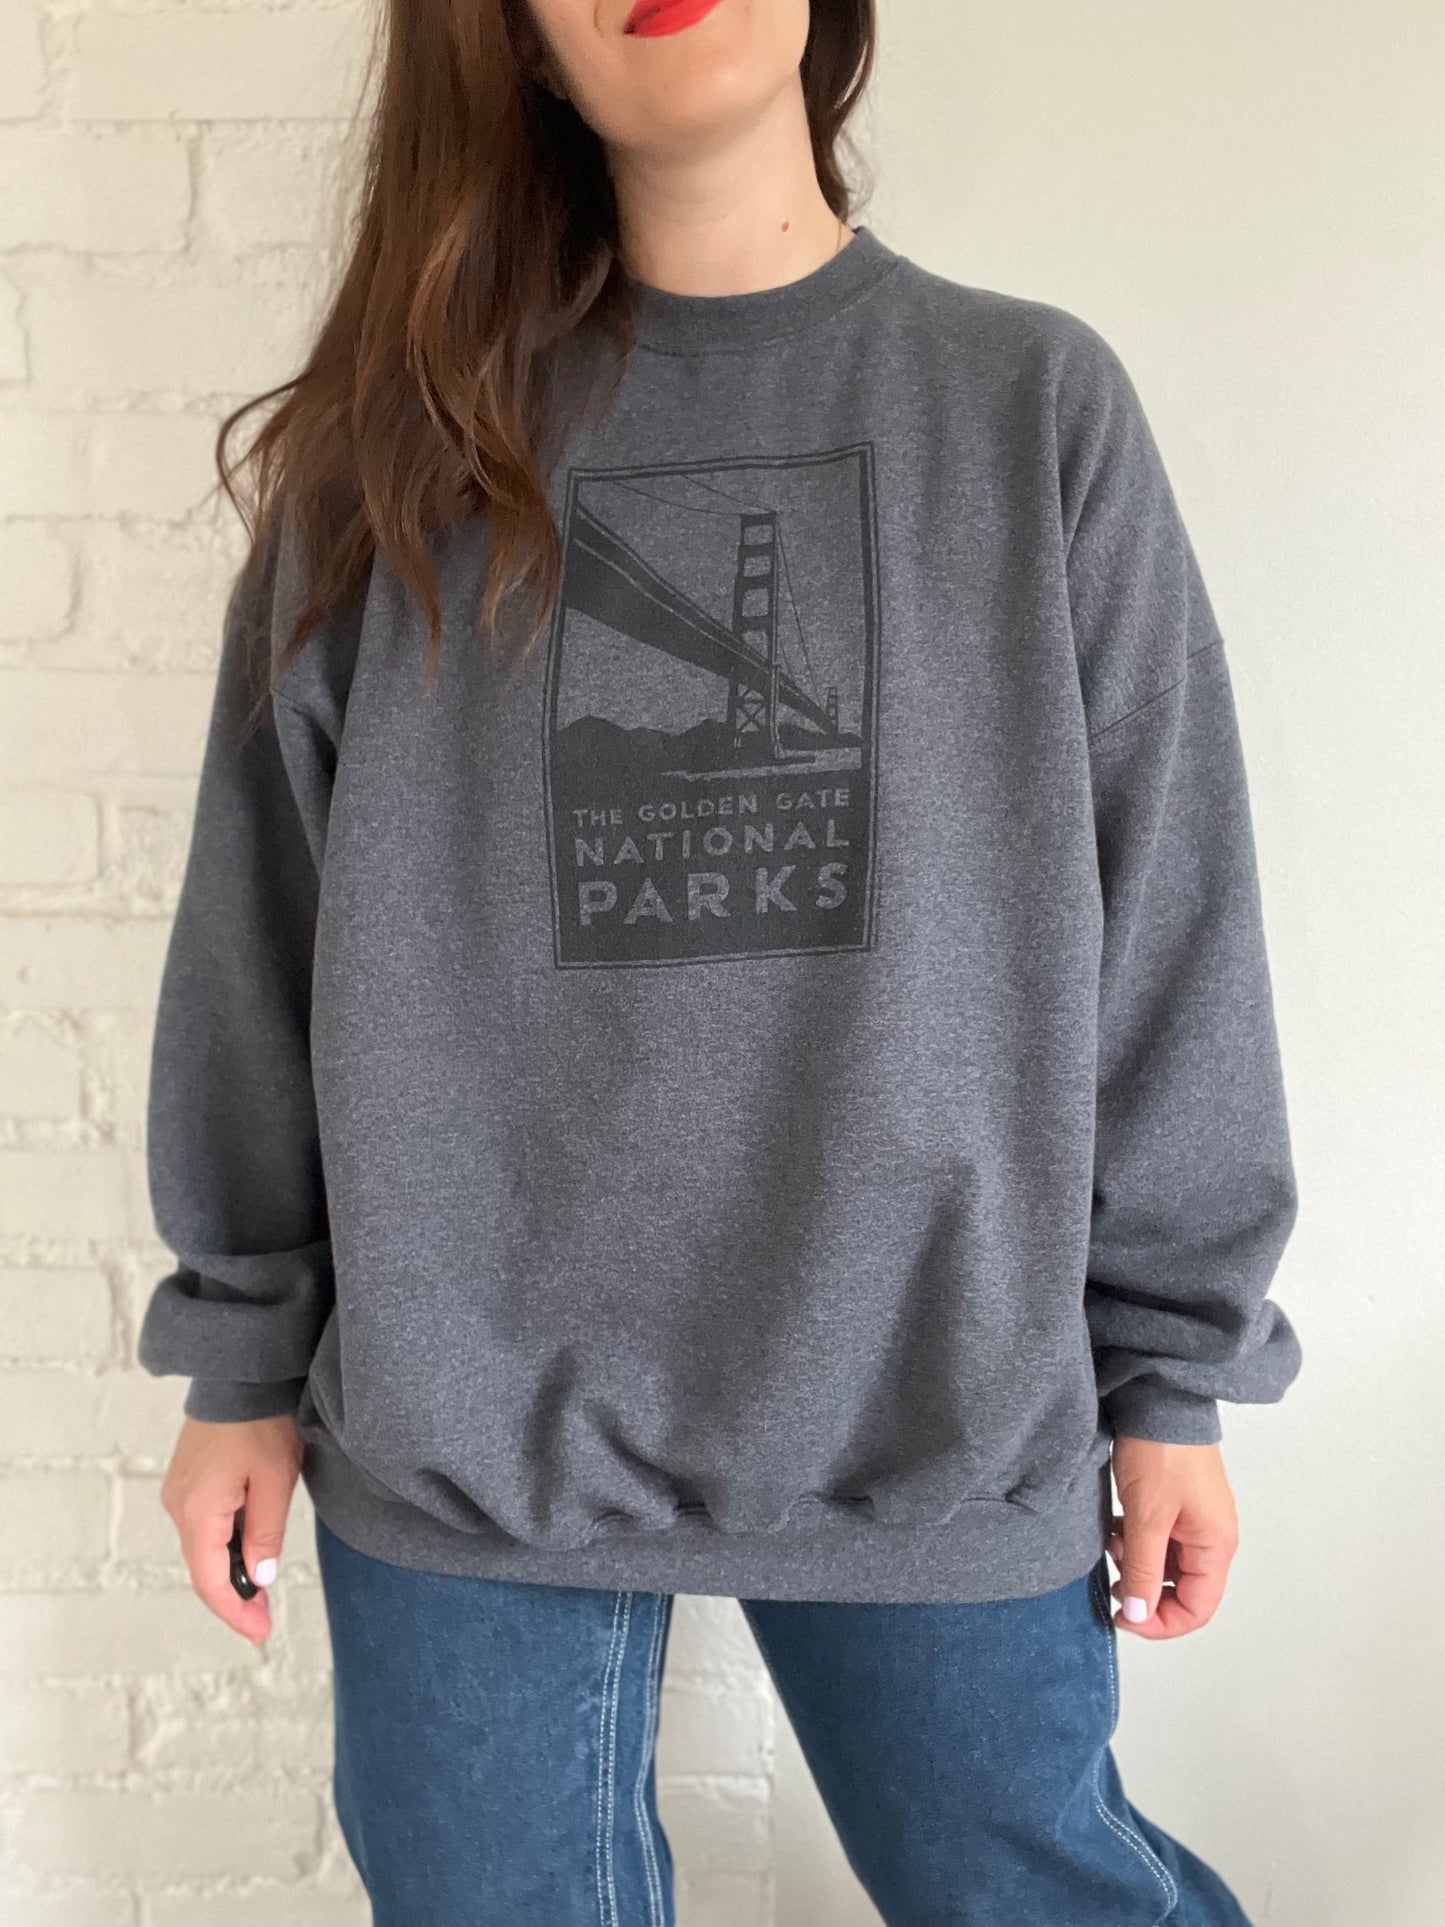 Golden Gate National Parks Bridge Sweater - 2XL